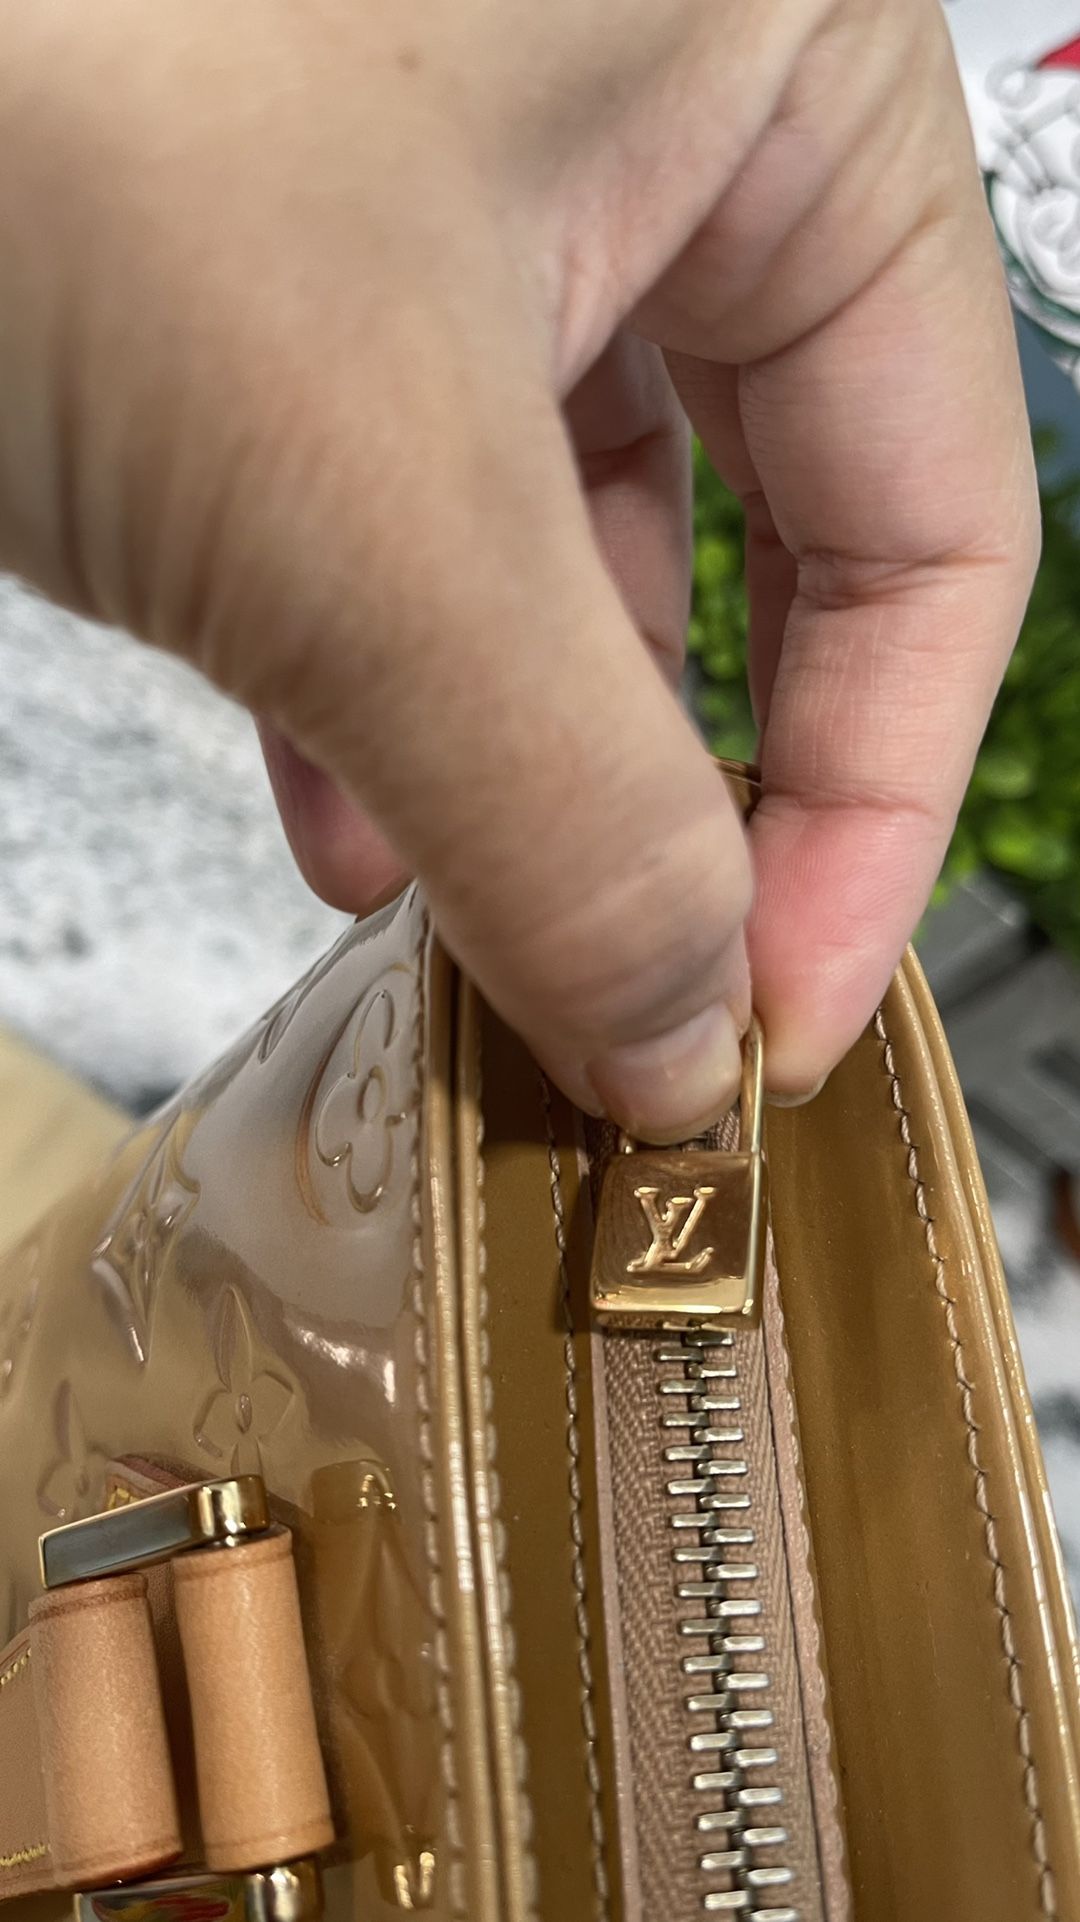 Louis Vuitton Houston Zip Tote Bag